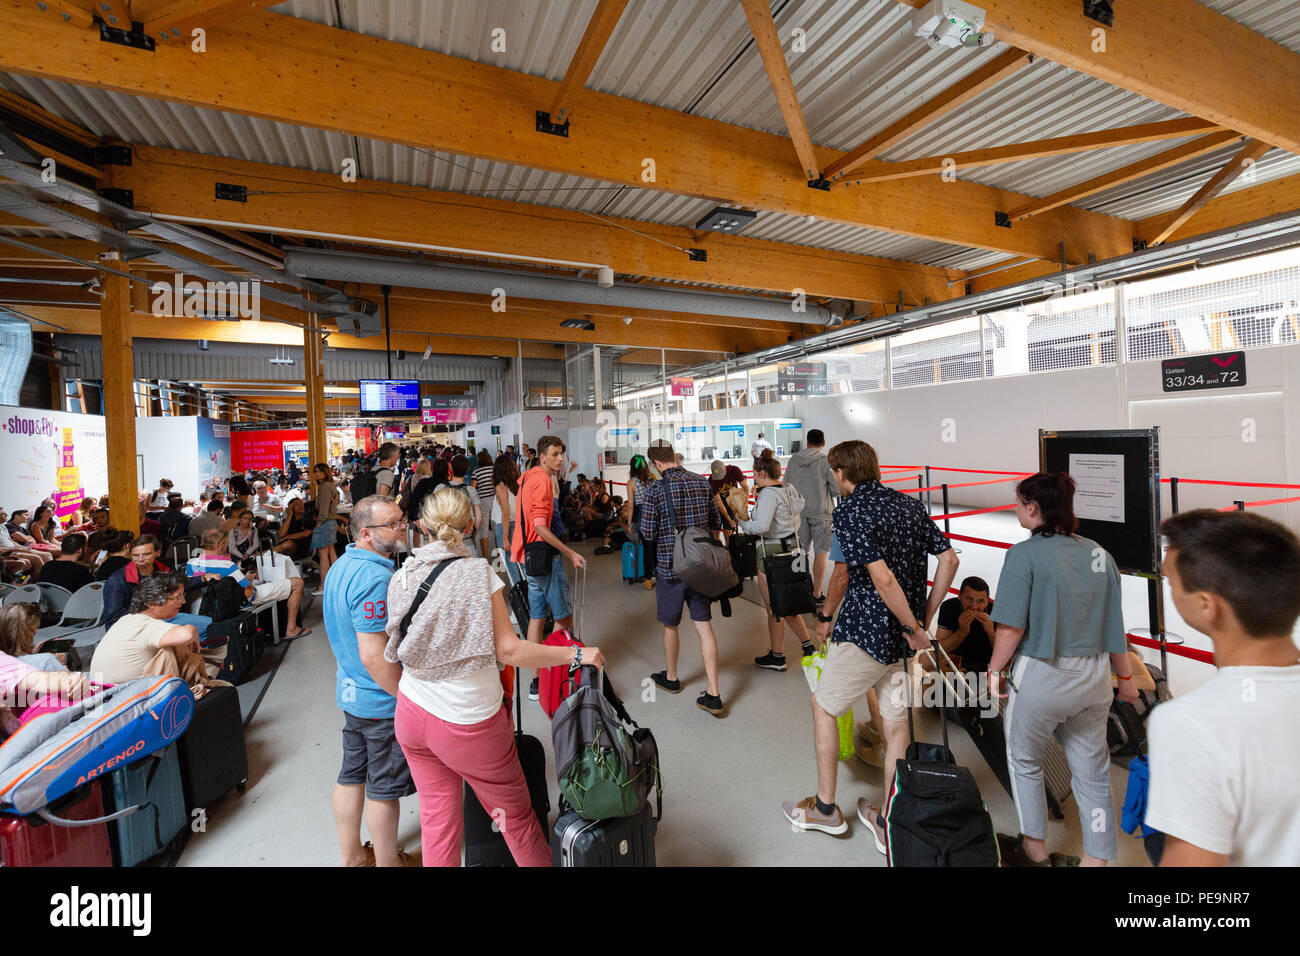 Passagiere innerhalb der Billi Terminal, Flughafen Bordeaux, Bordeaux Frankreich Europa Stockfoto